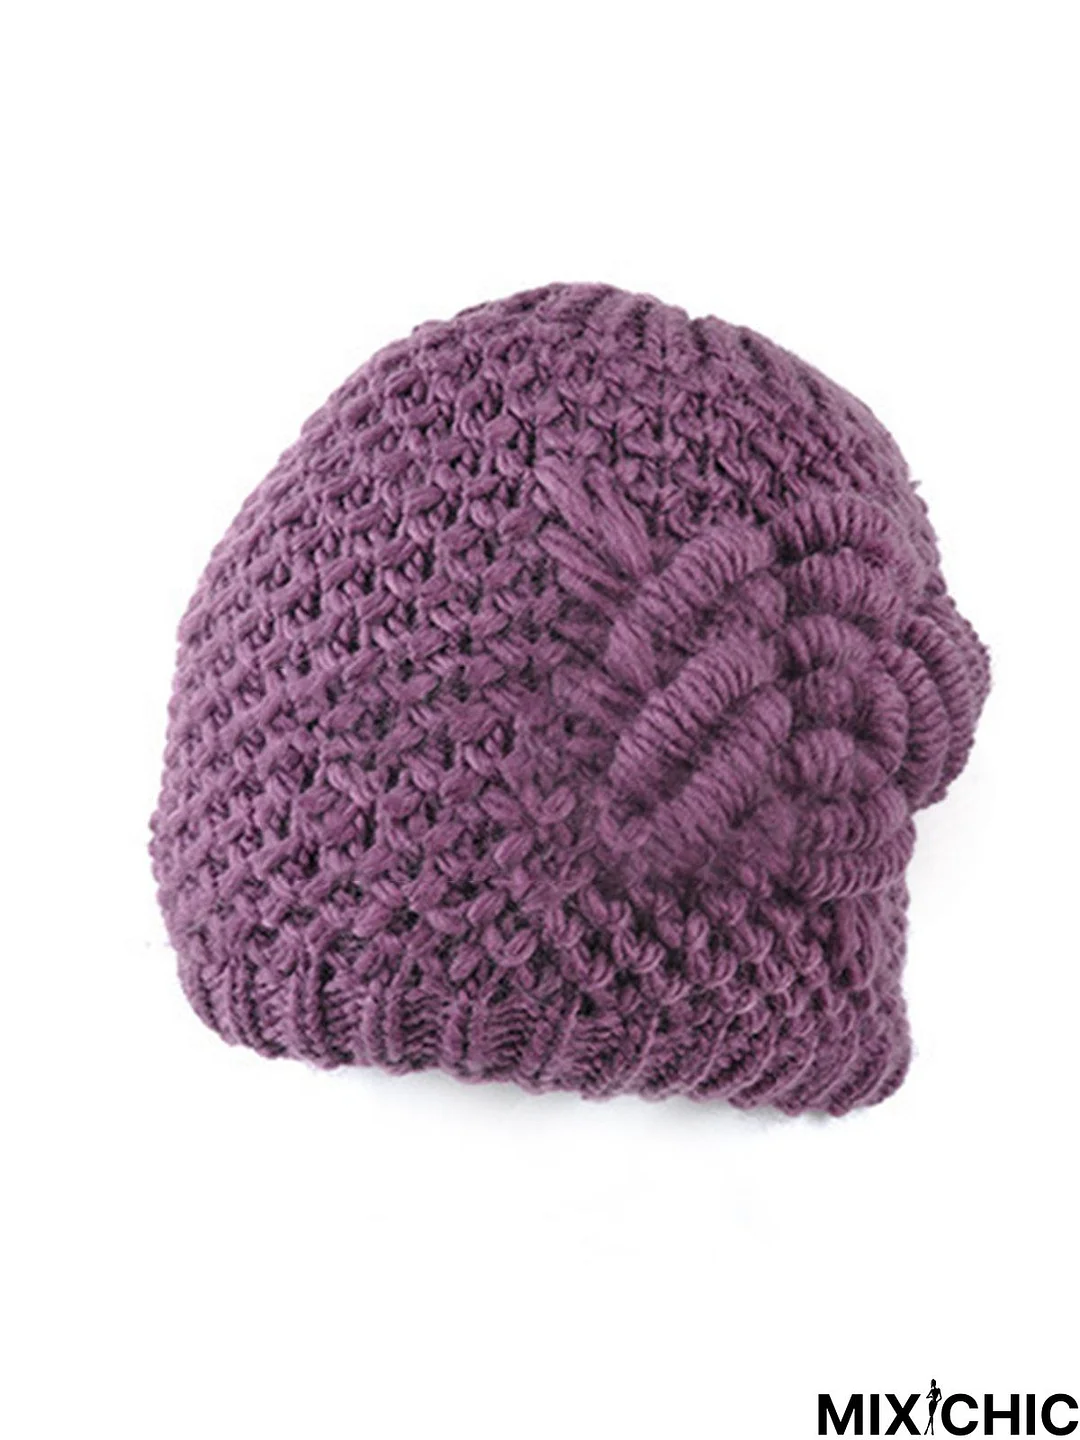 3D Flower Knitted Warm Hat